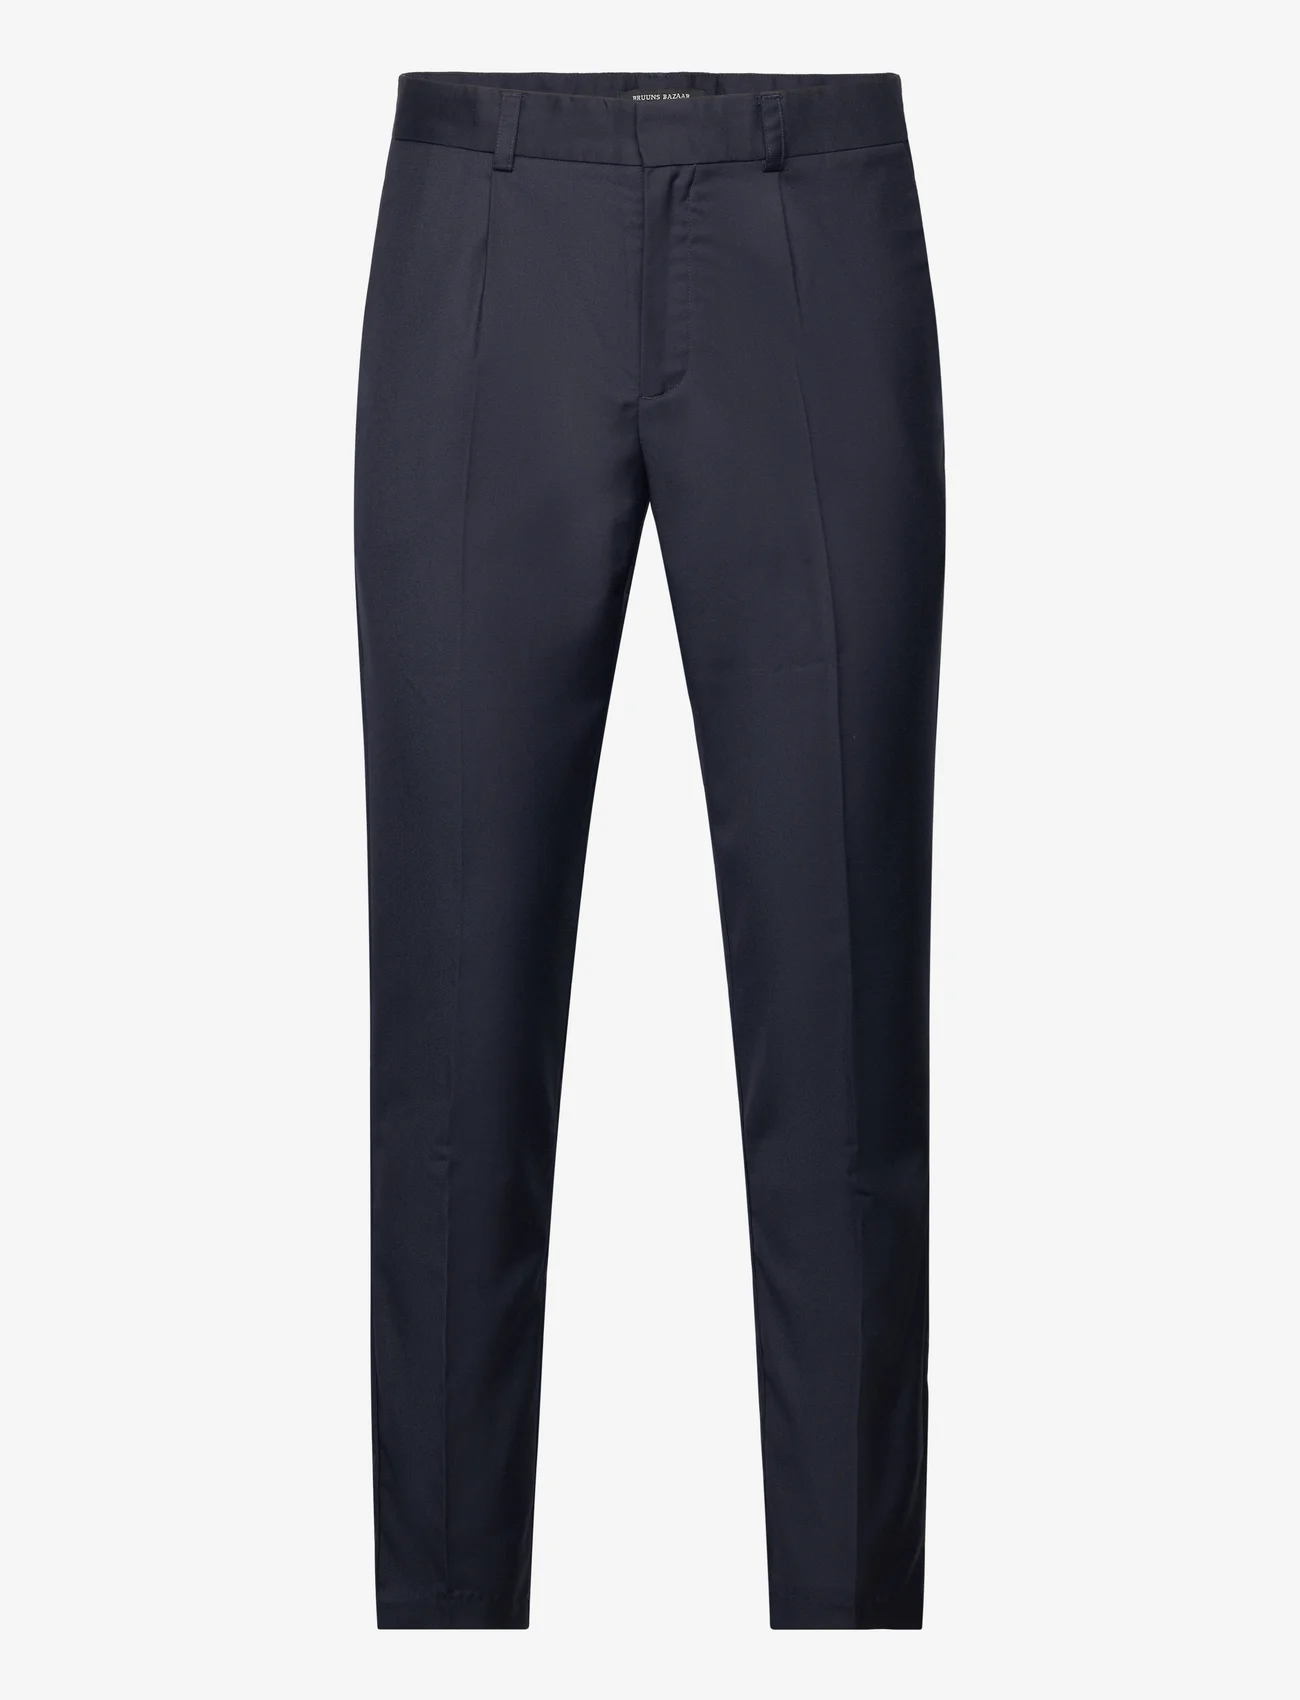 Bruuns Bazaar - MicksBBDagger pants - pantalons - navy - 0